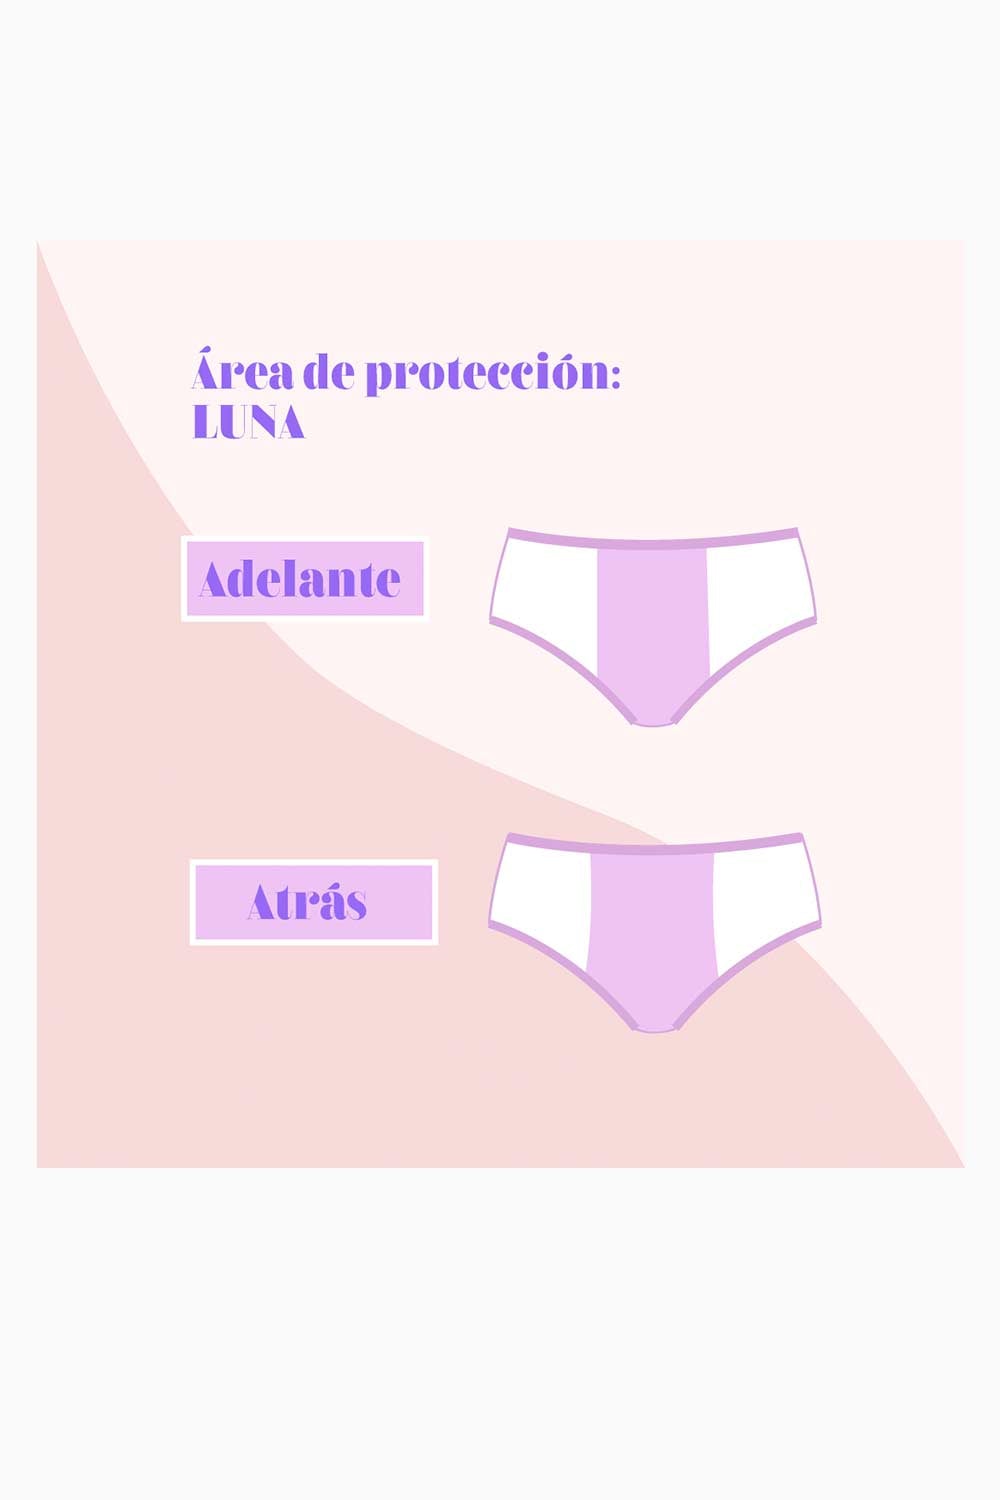 LUNA | Calzón Menstrual (flujo abundante)